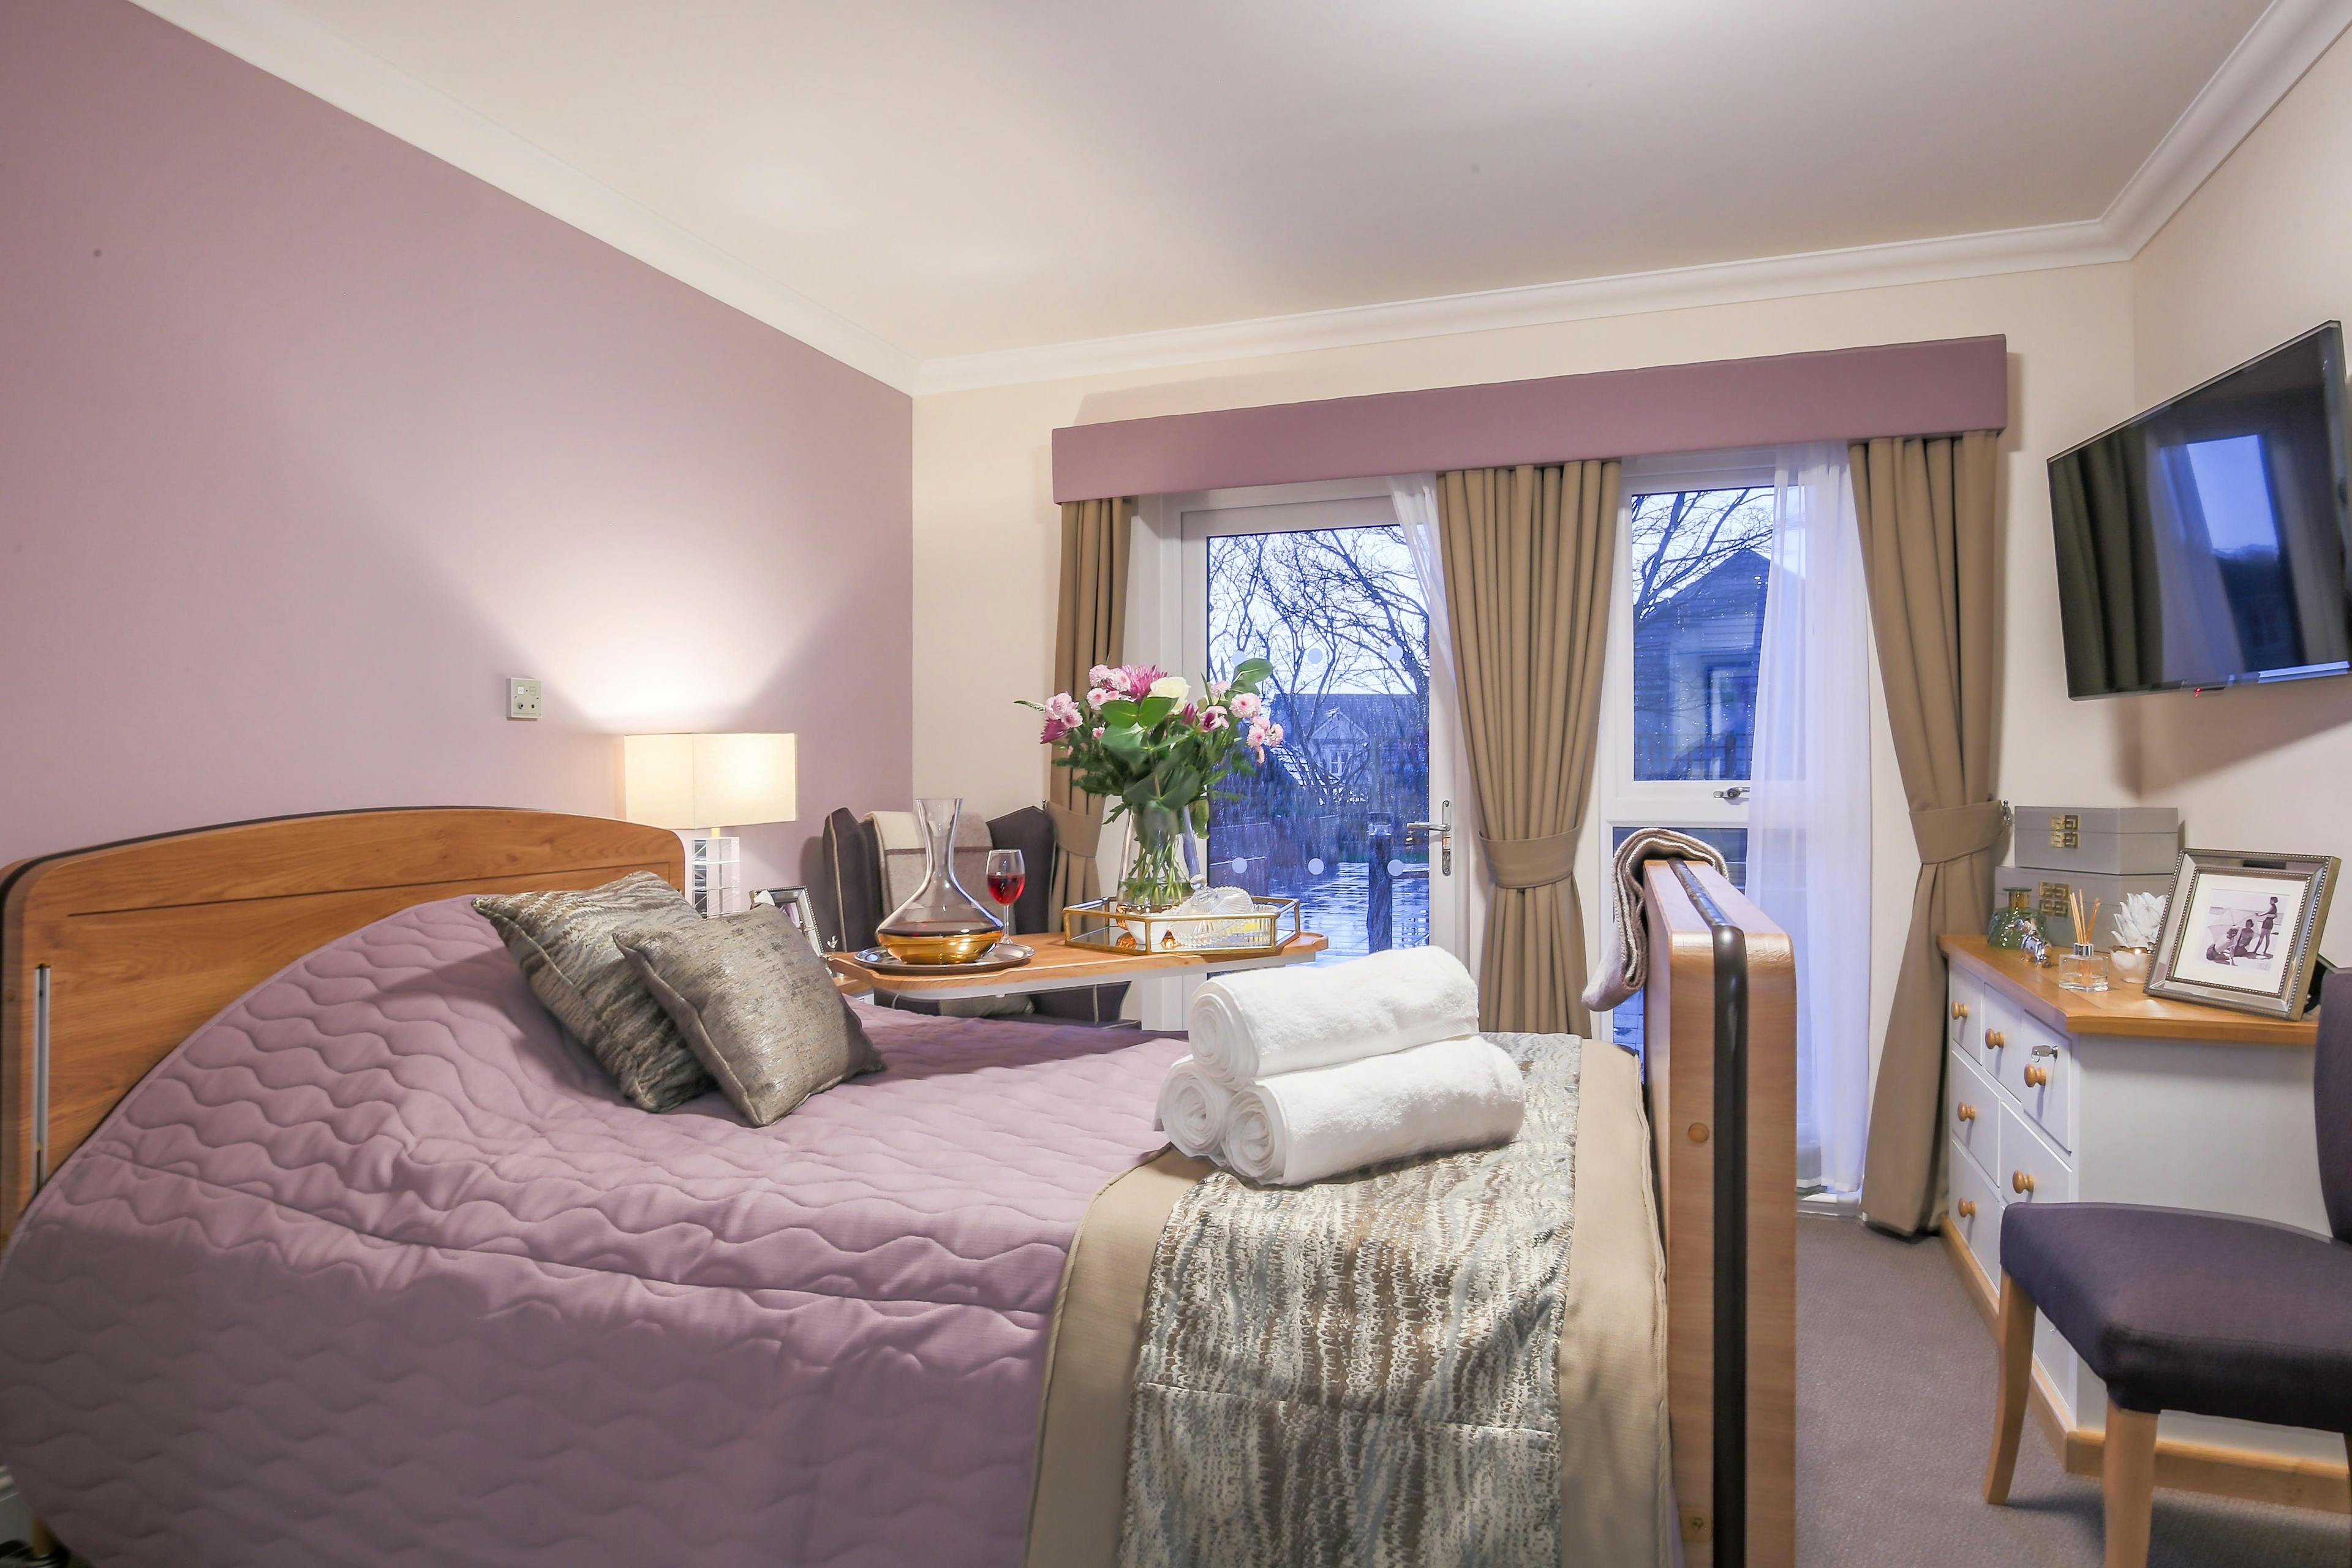 Bedroom at Queens Manor Care Home in Edinburgh, Scotland